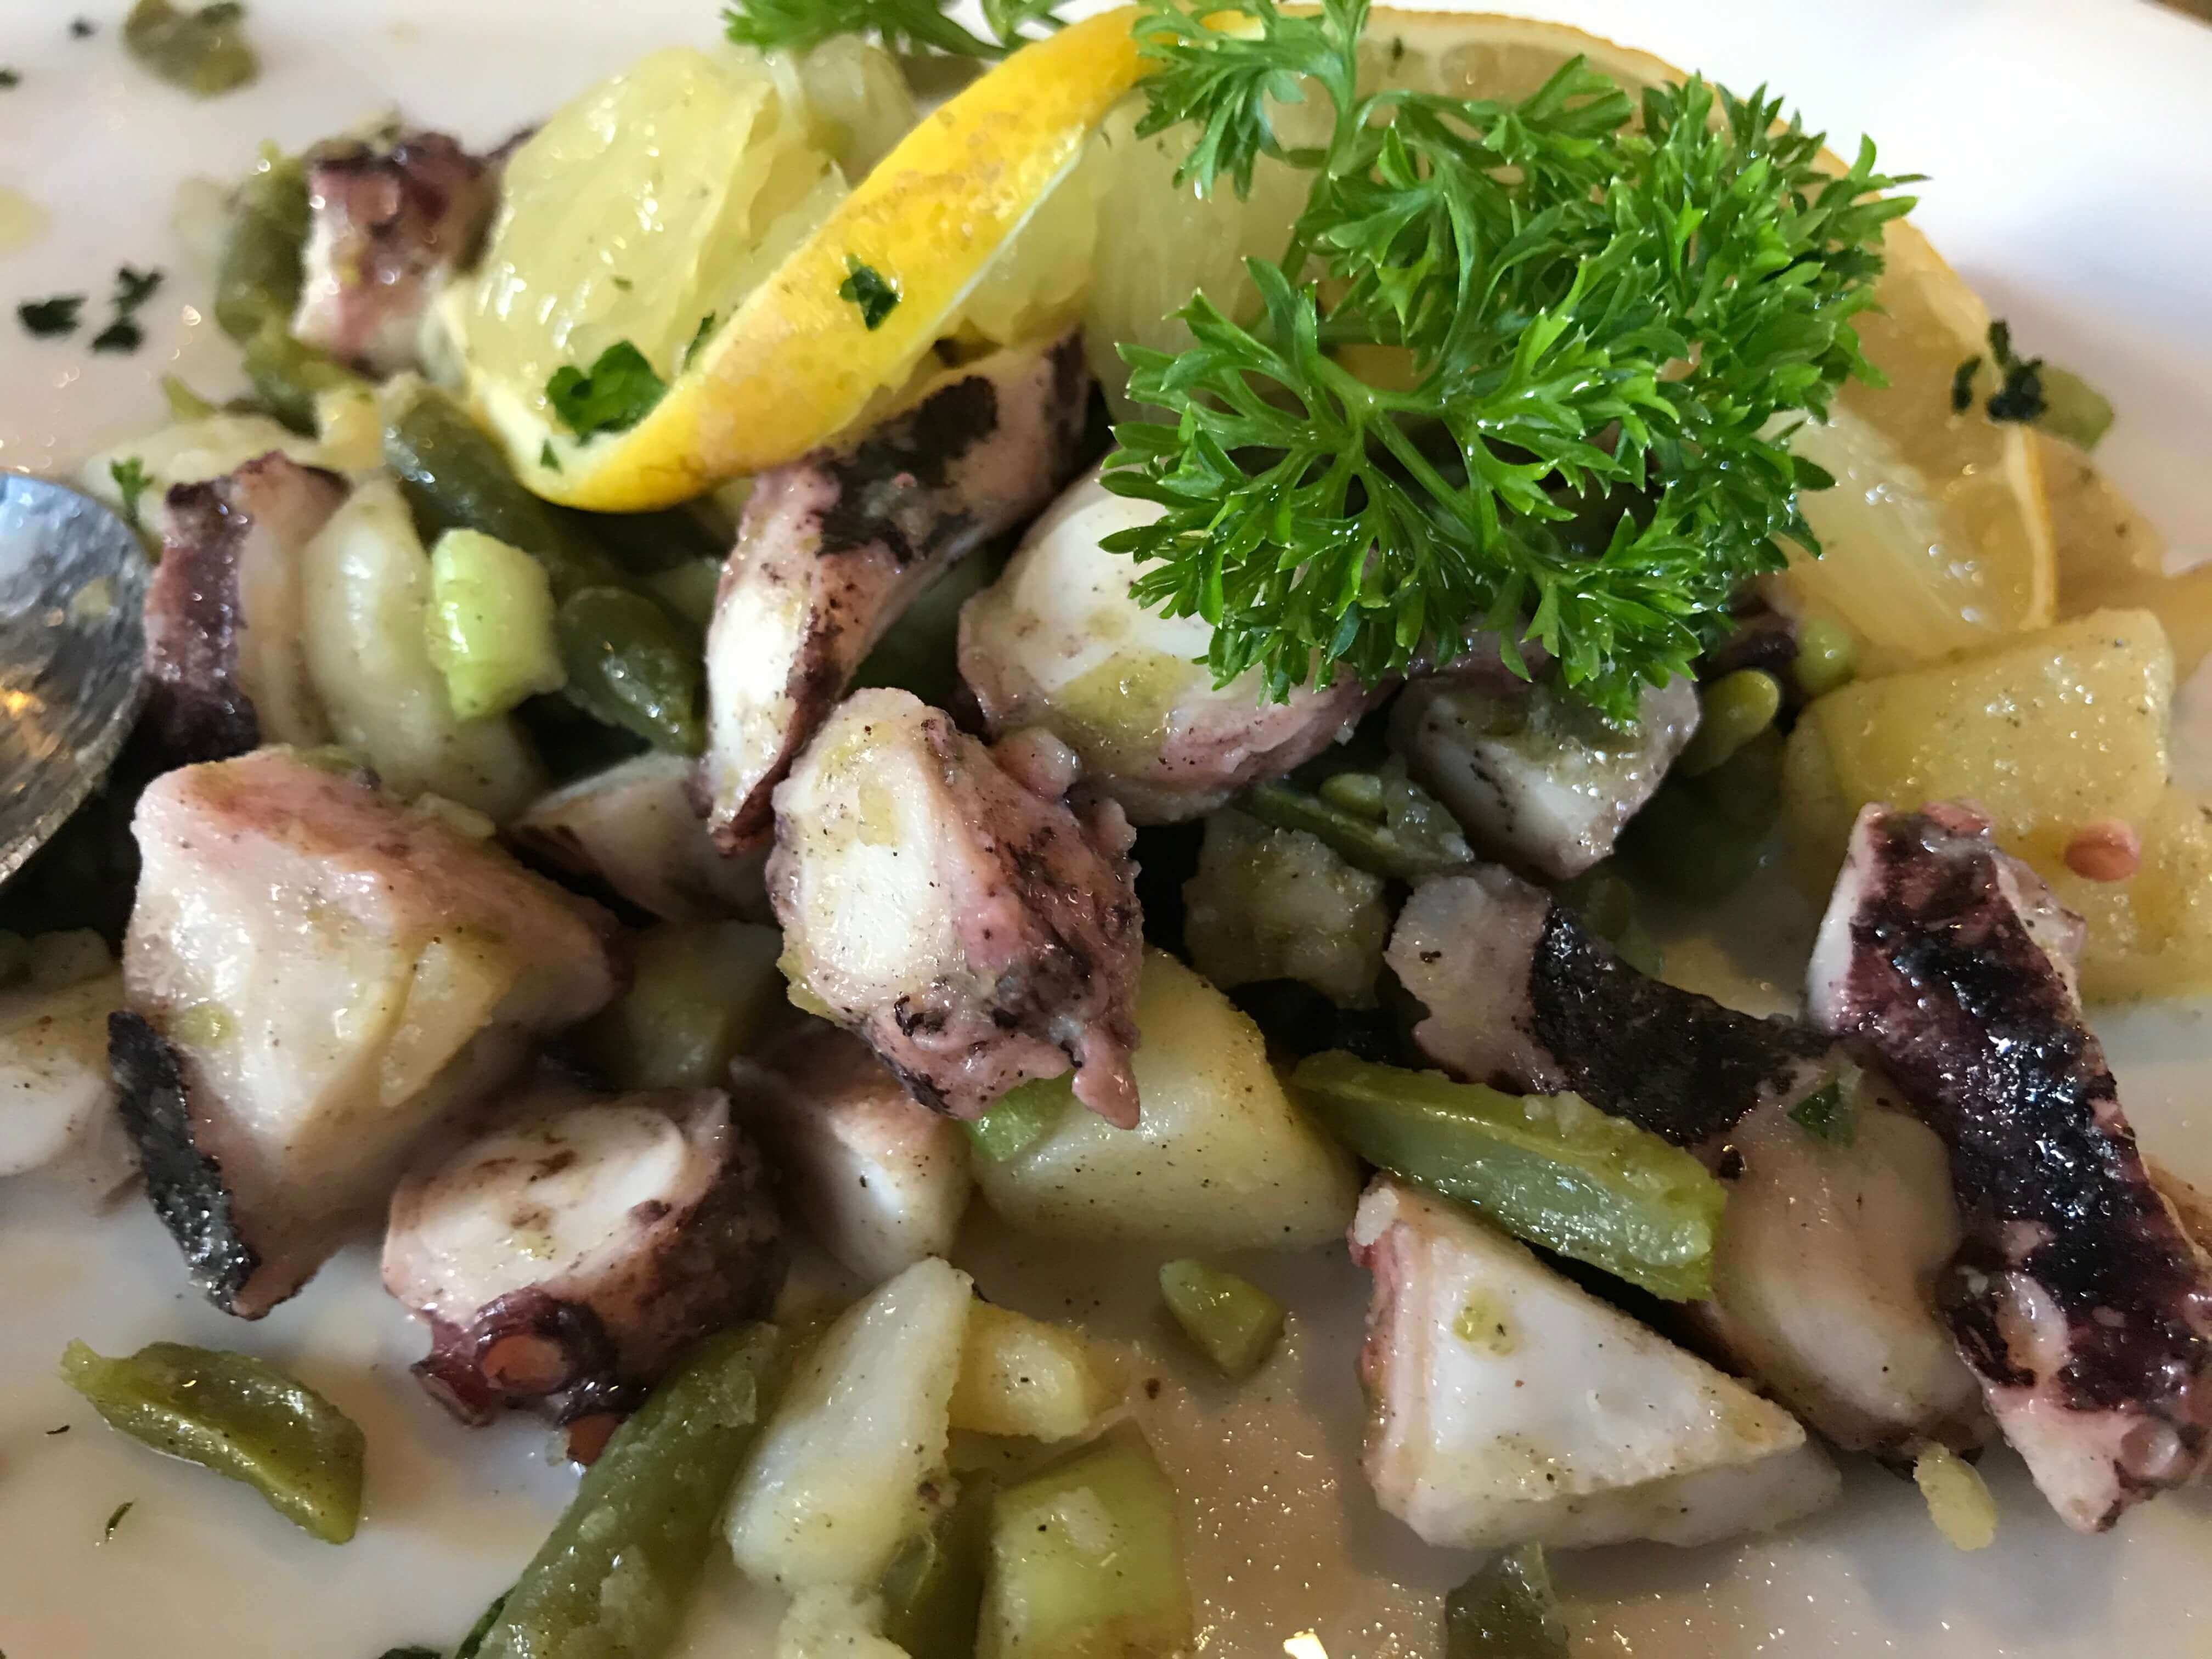 Italy, Venice - Octopus salad